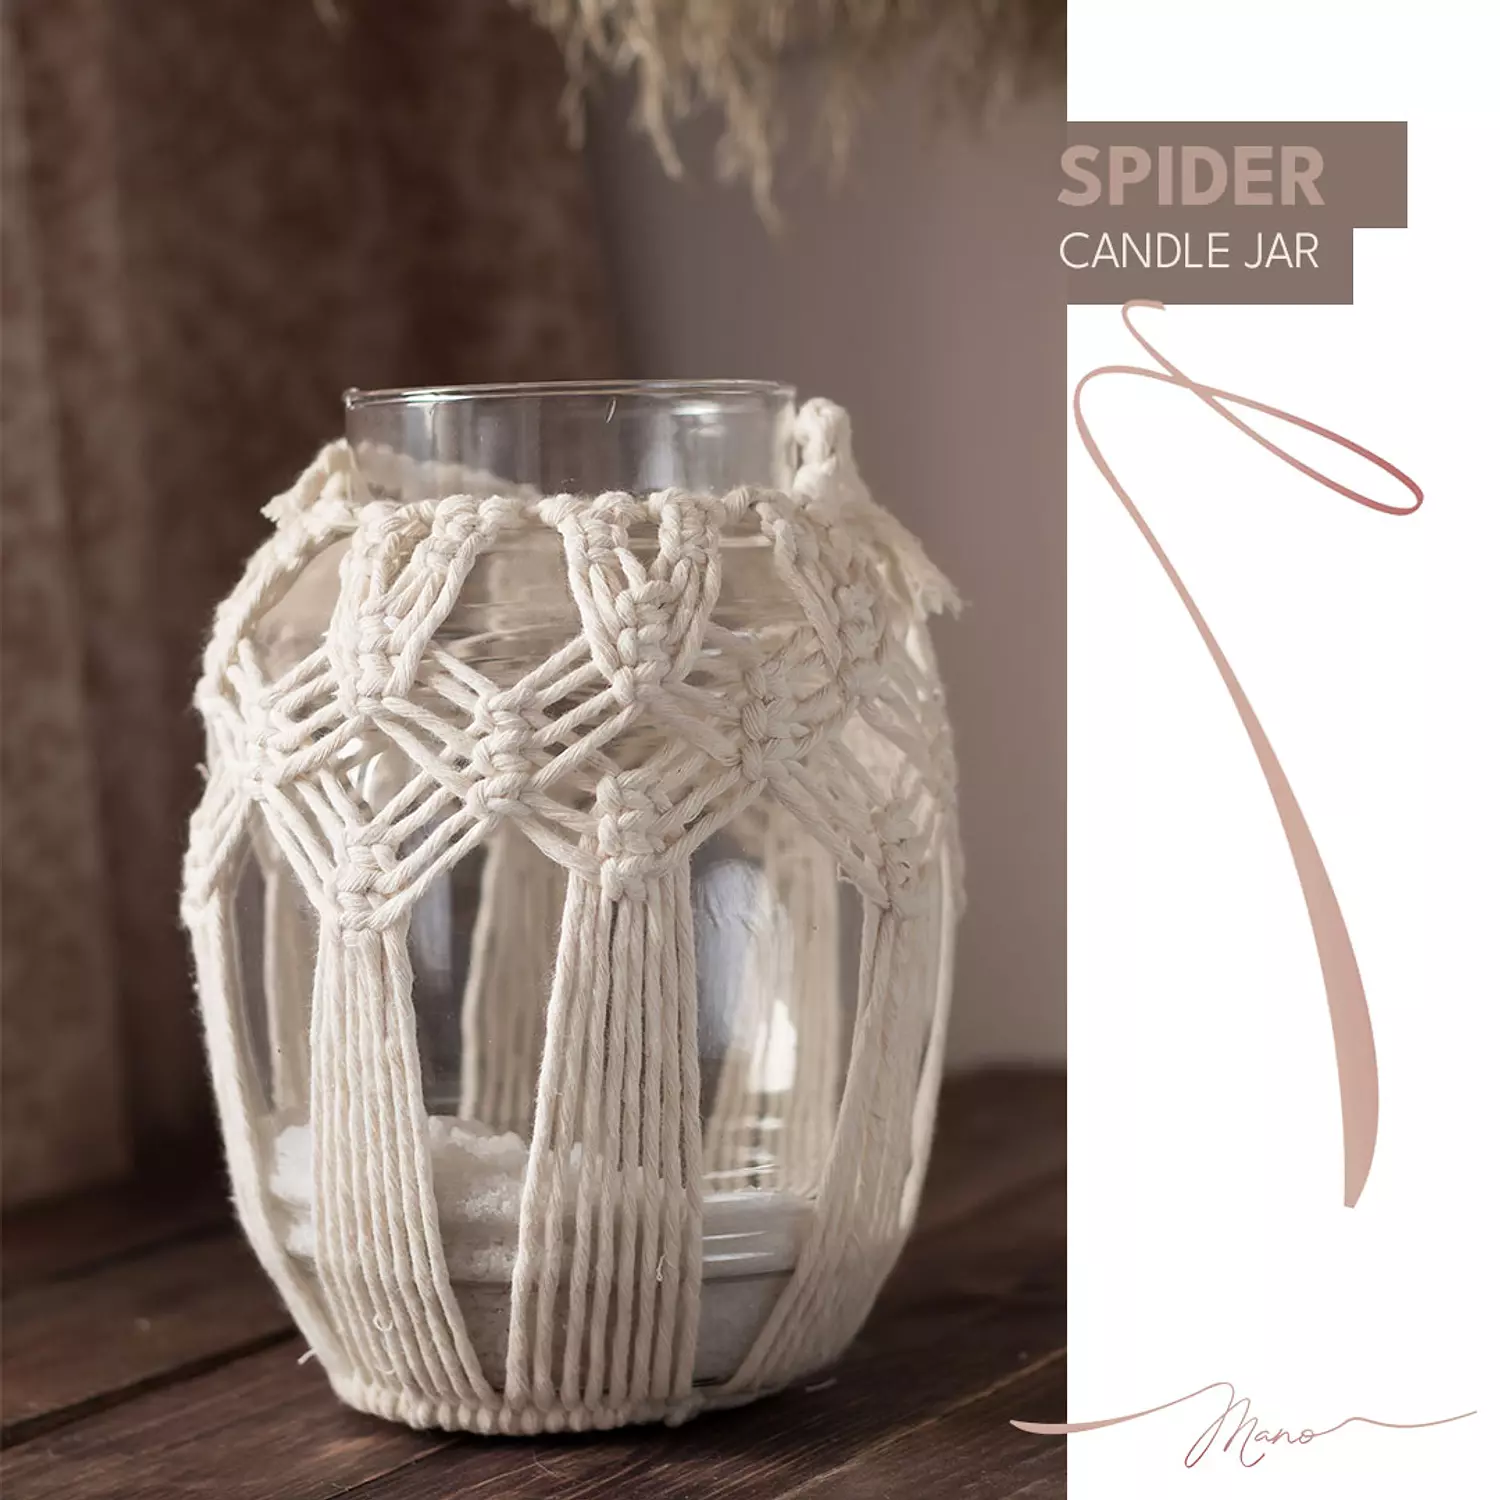 Spider Candle Jar hover image